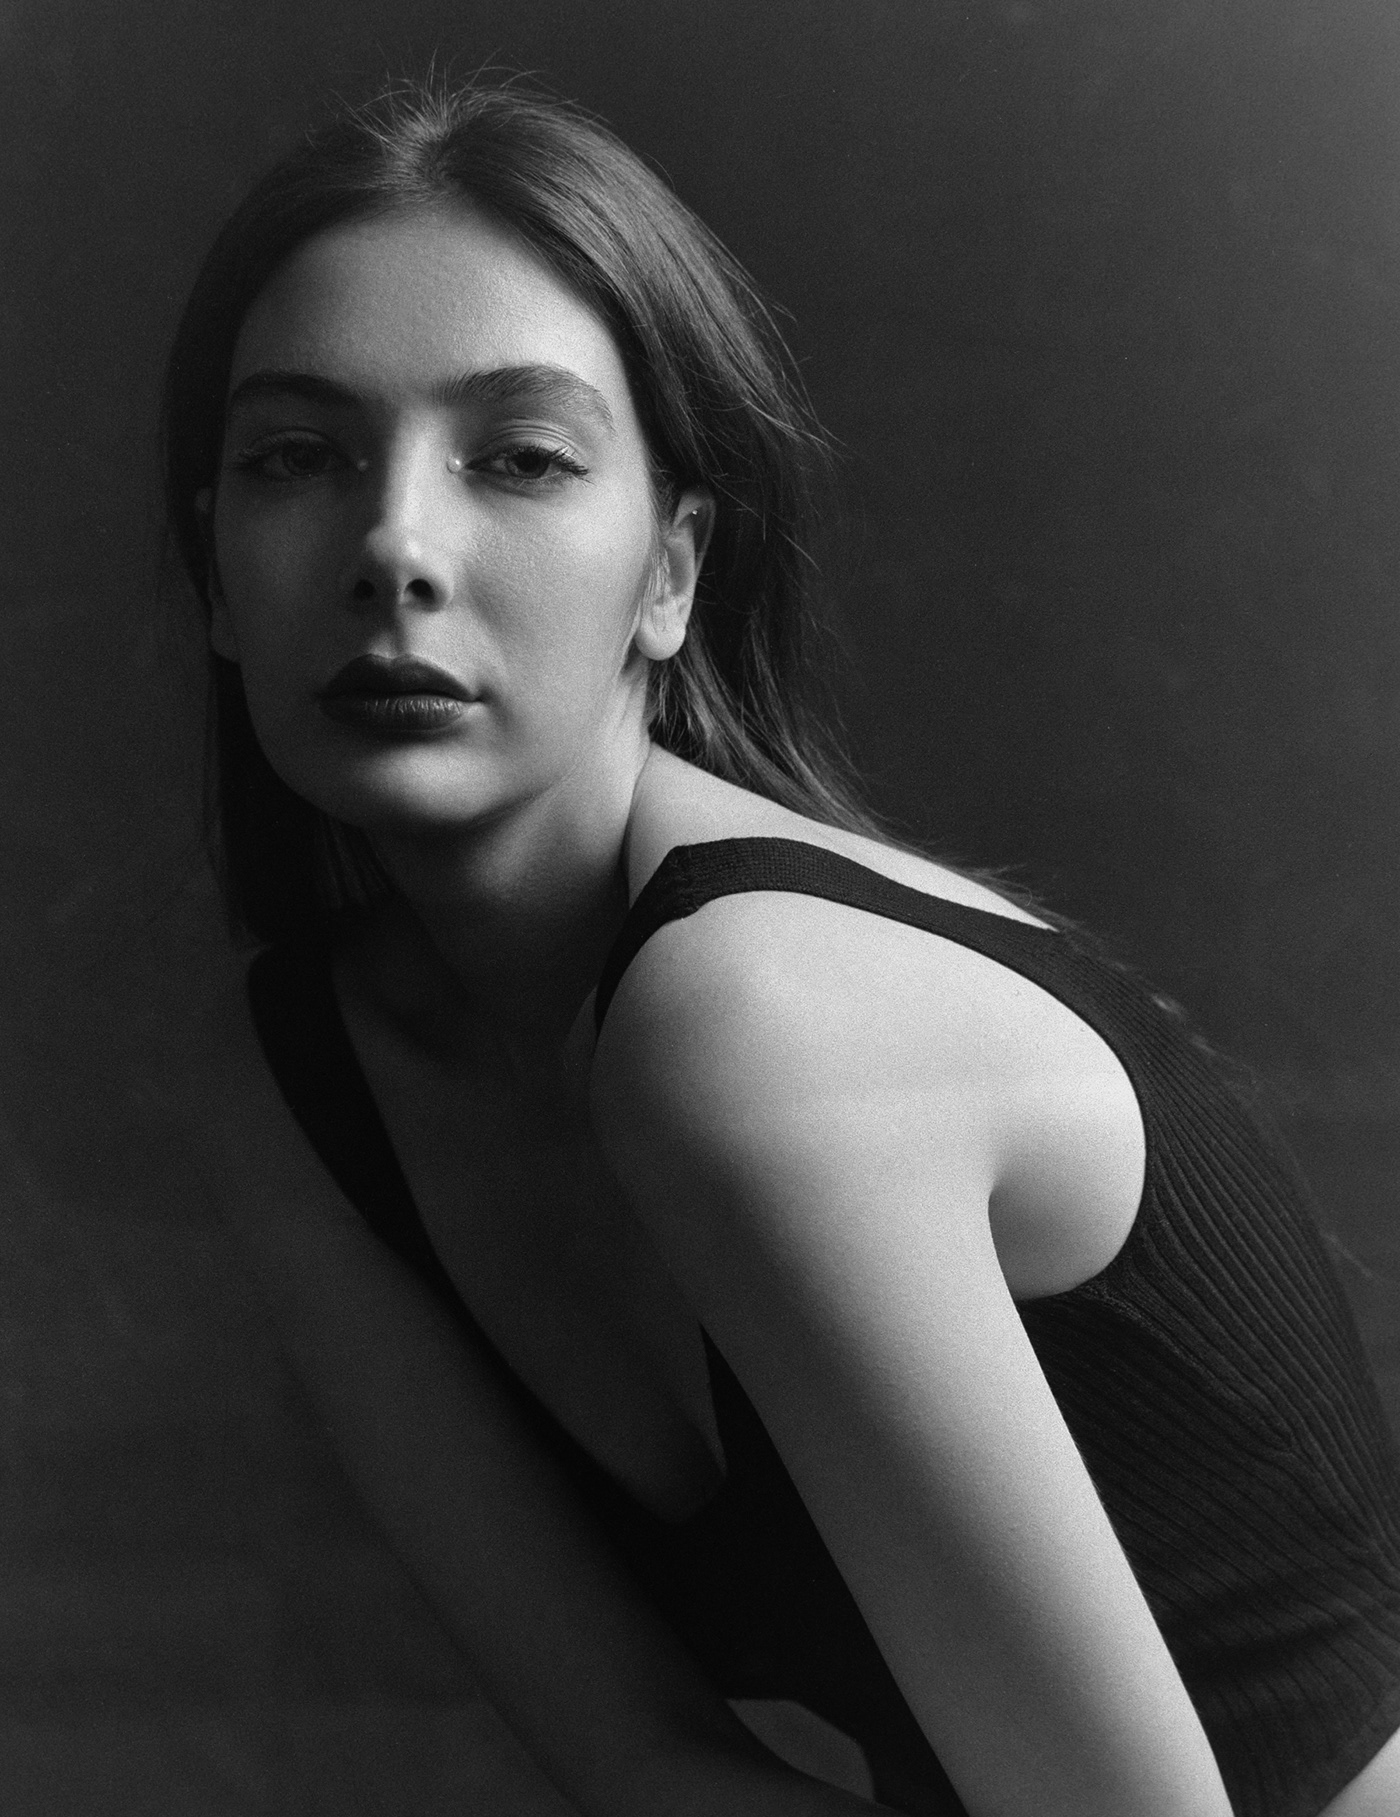 analog photography beauty black and white model photoshoot portrait woman